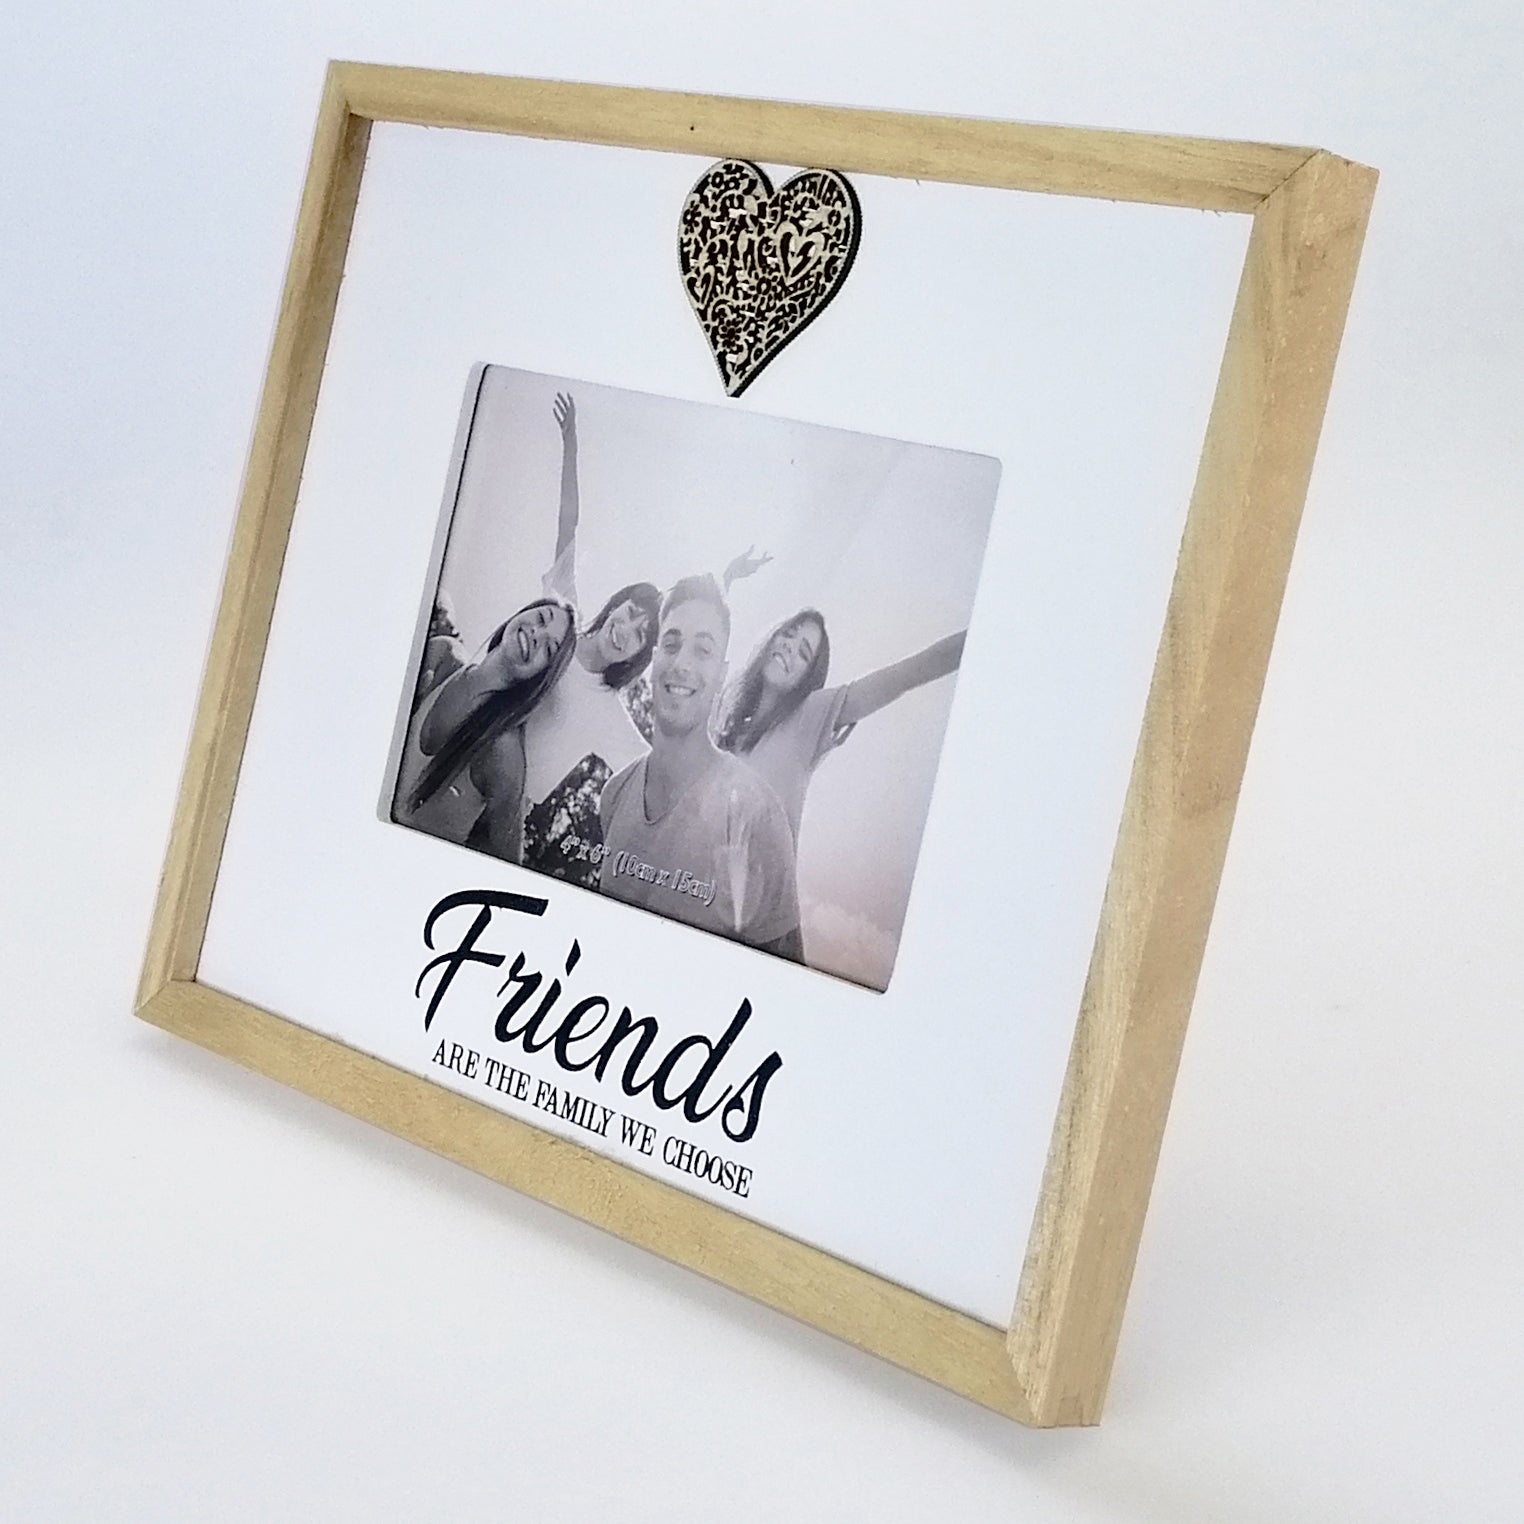 Sentimental Frame 4"x 6" - Friends